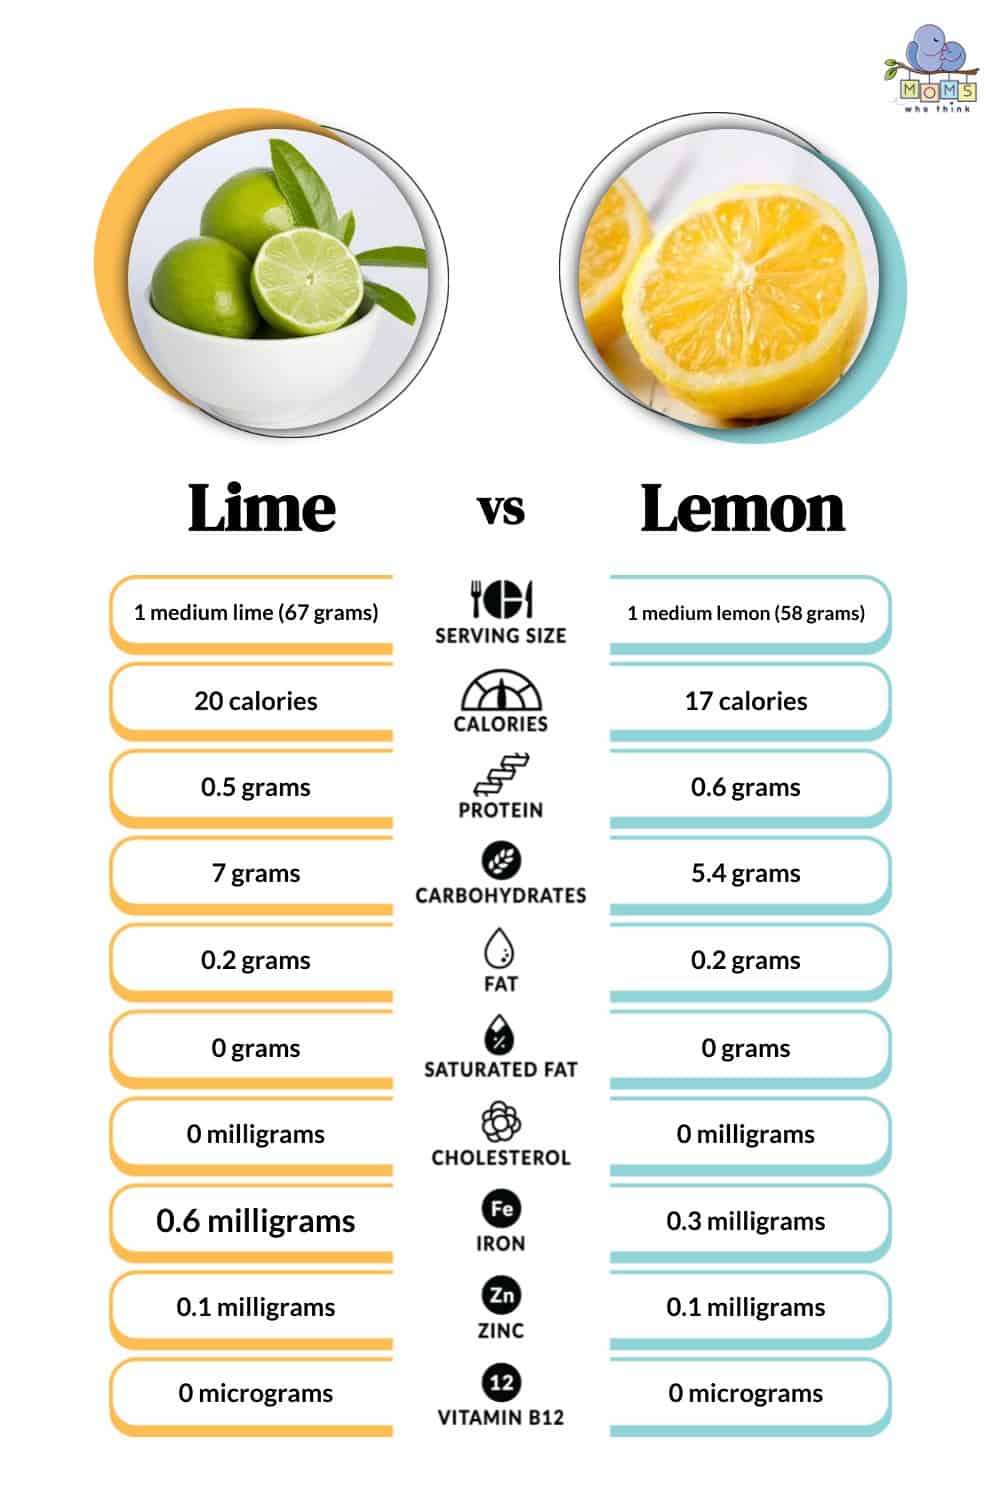 Lime vs Lemon Nutritional Facts